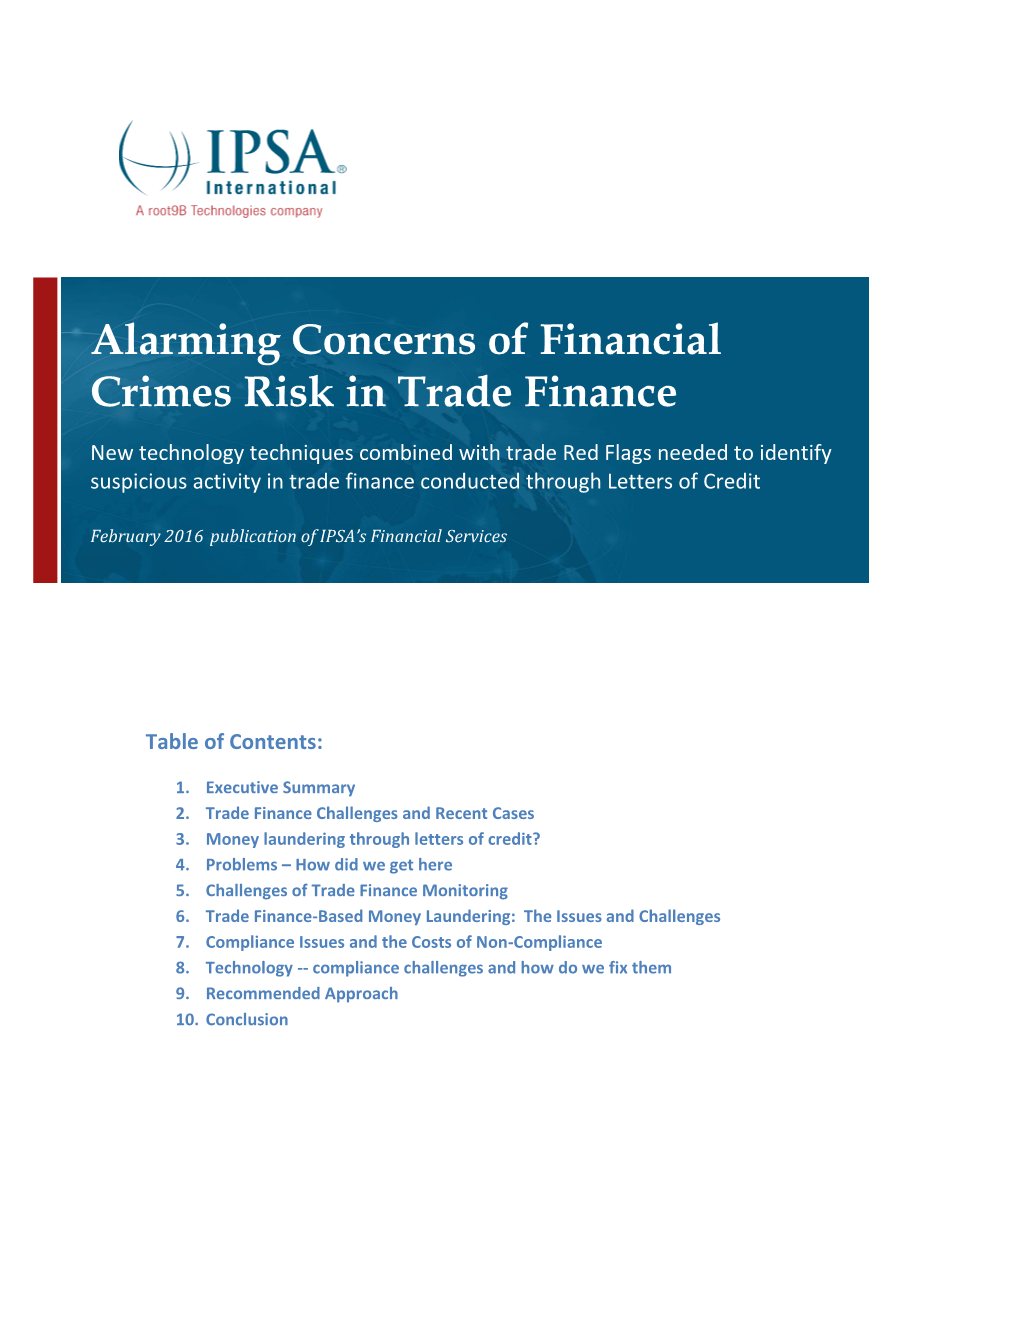 Alarming Concerns of Financial Crimes Risk in Trade Finance